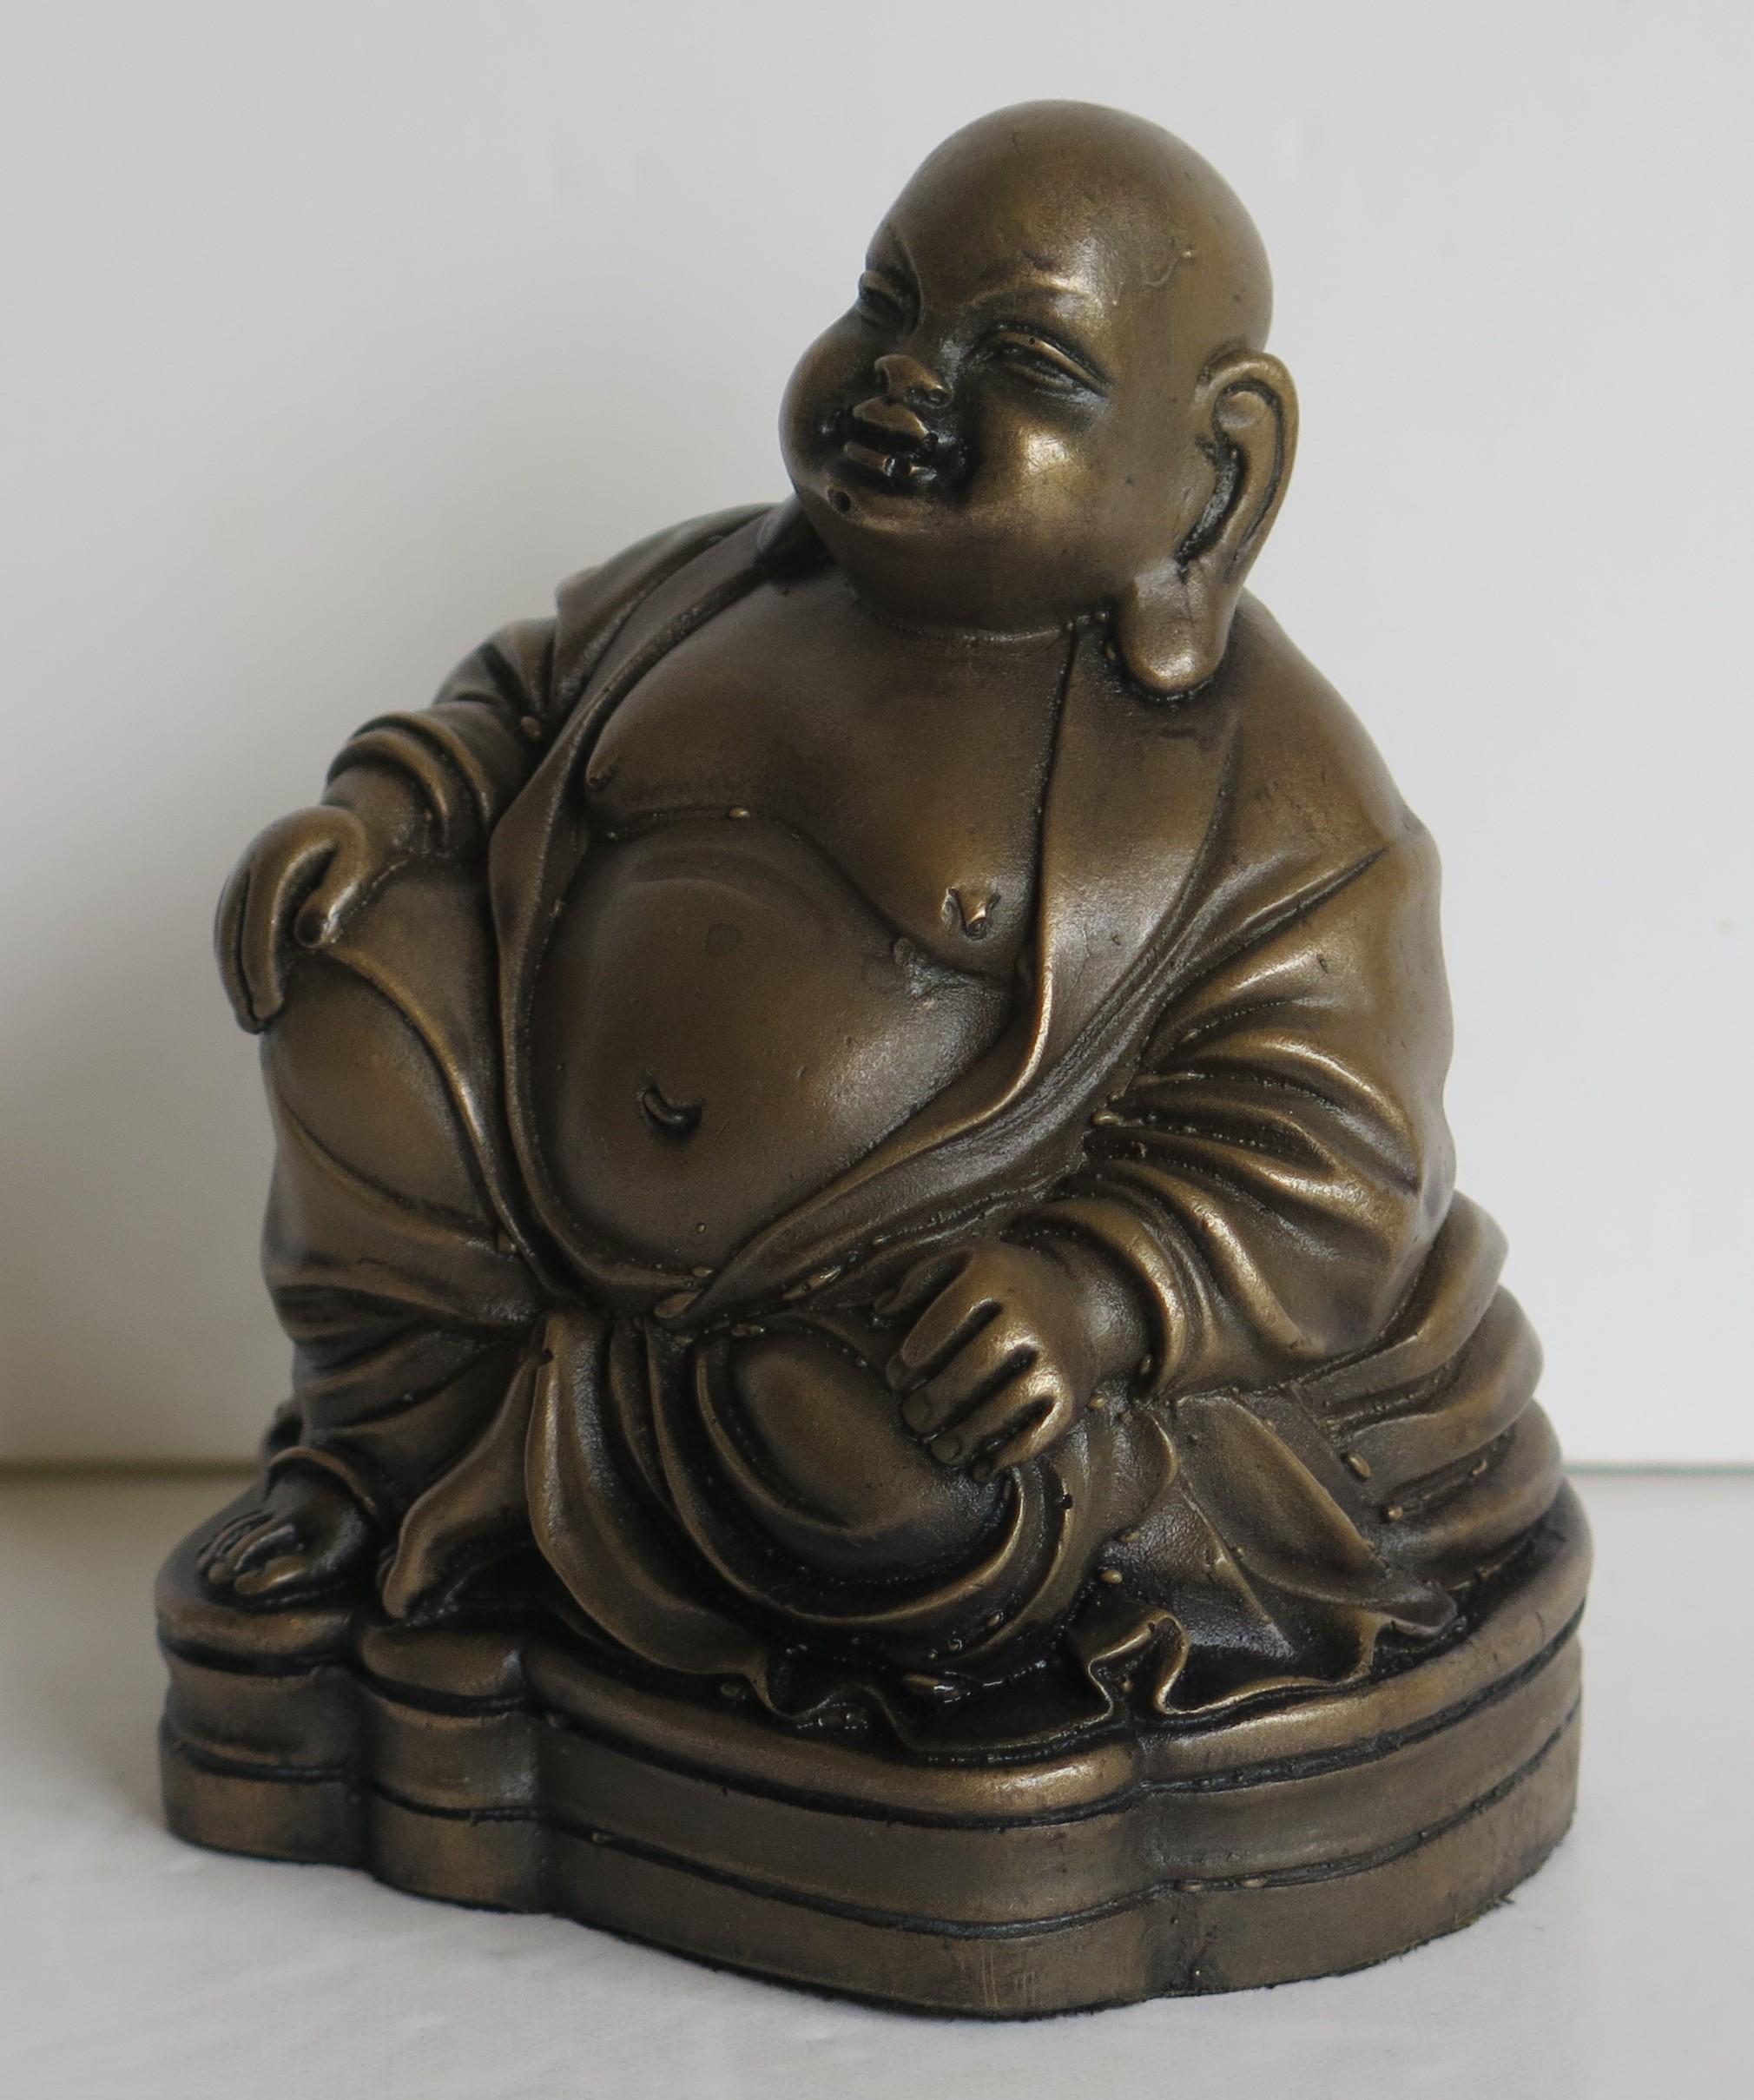 Cast Bronze Seated Buddha Sculpture or Statue, Circa 1920s